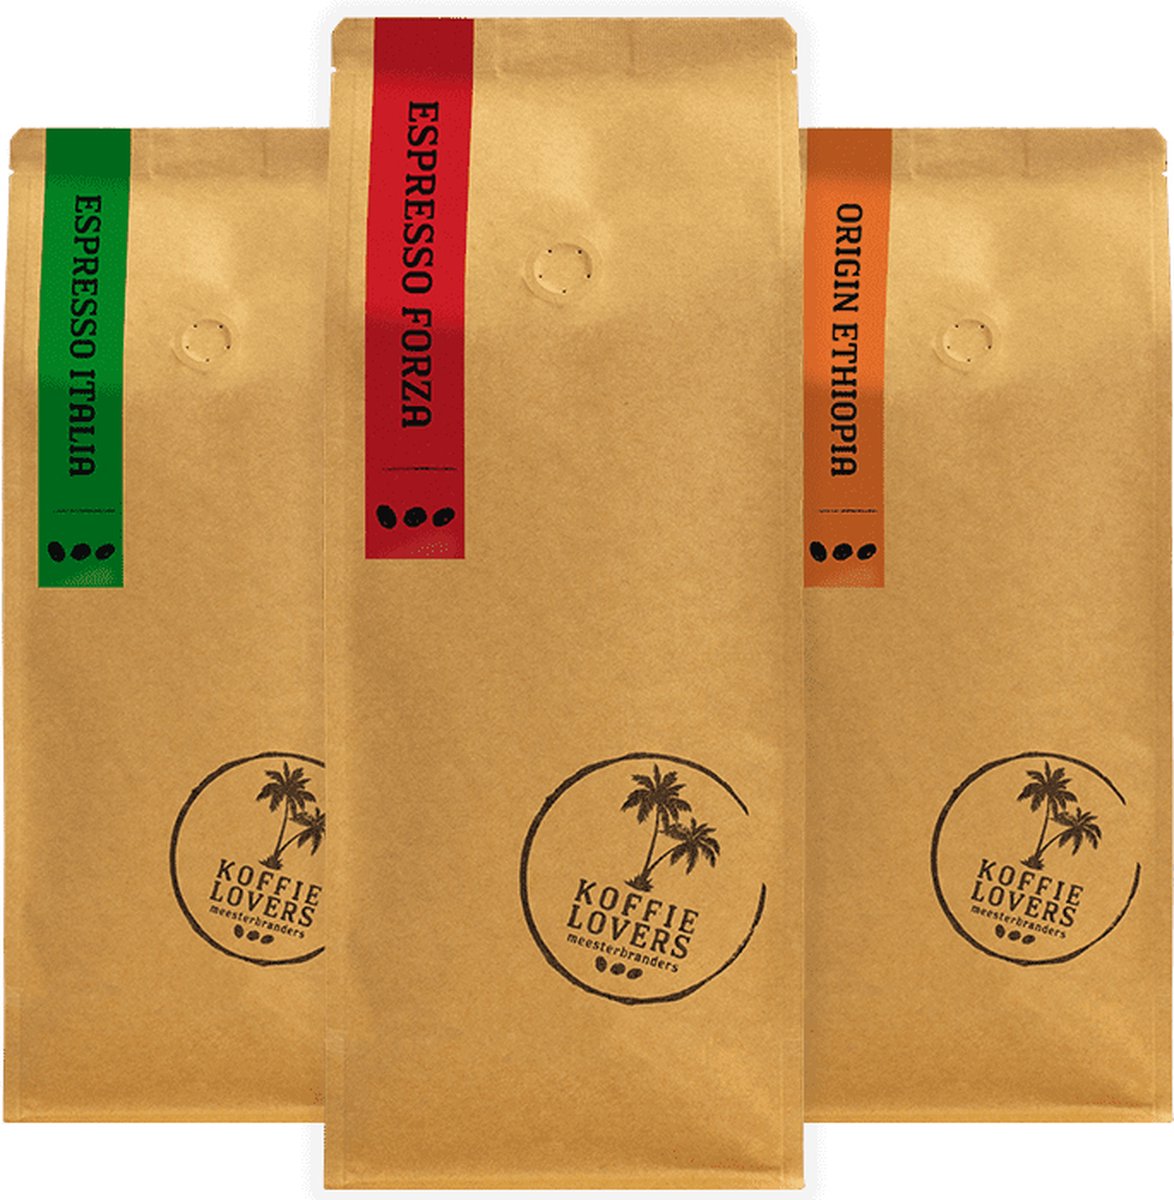 Koffiebonen - Early Bird - Proefpakket - Vers gebrand - Fair trade - 3 x 500 gr